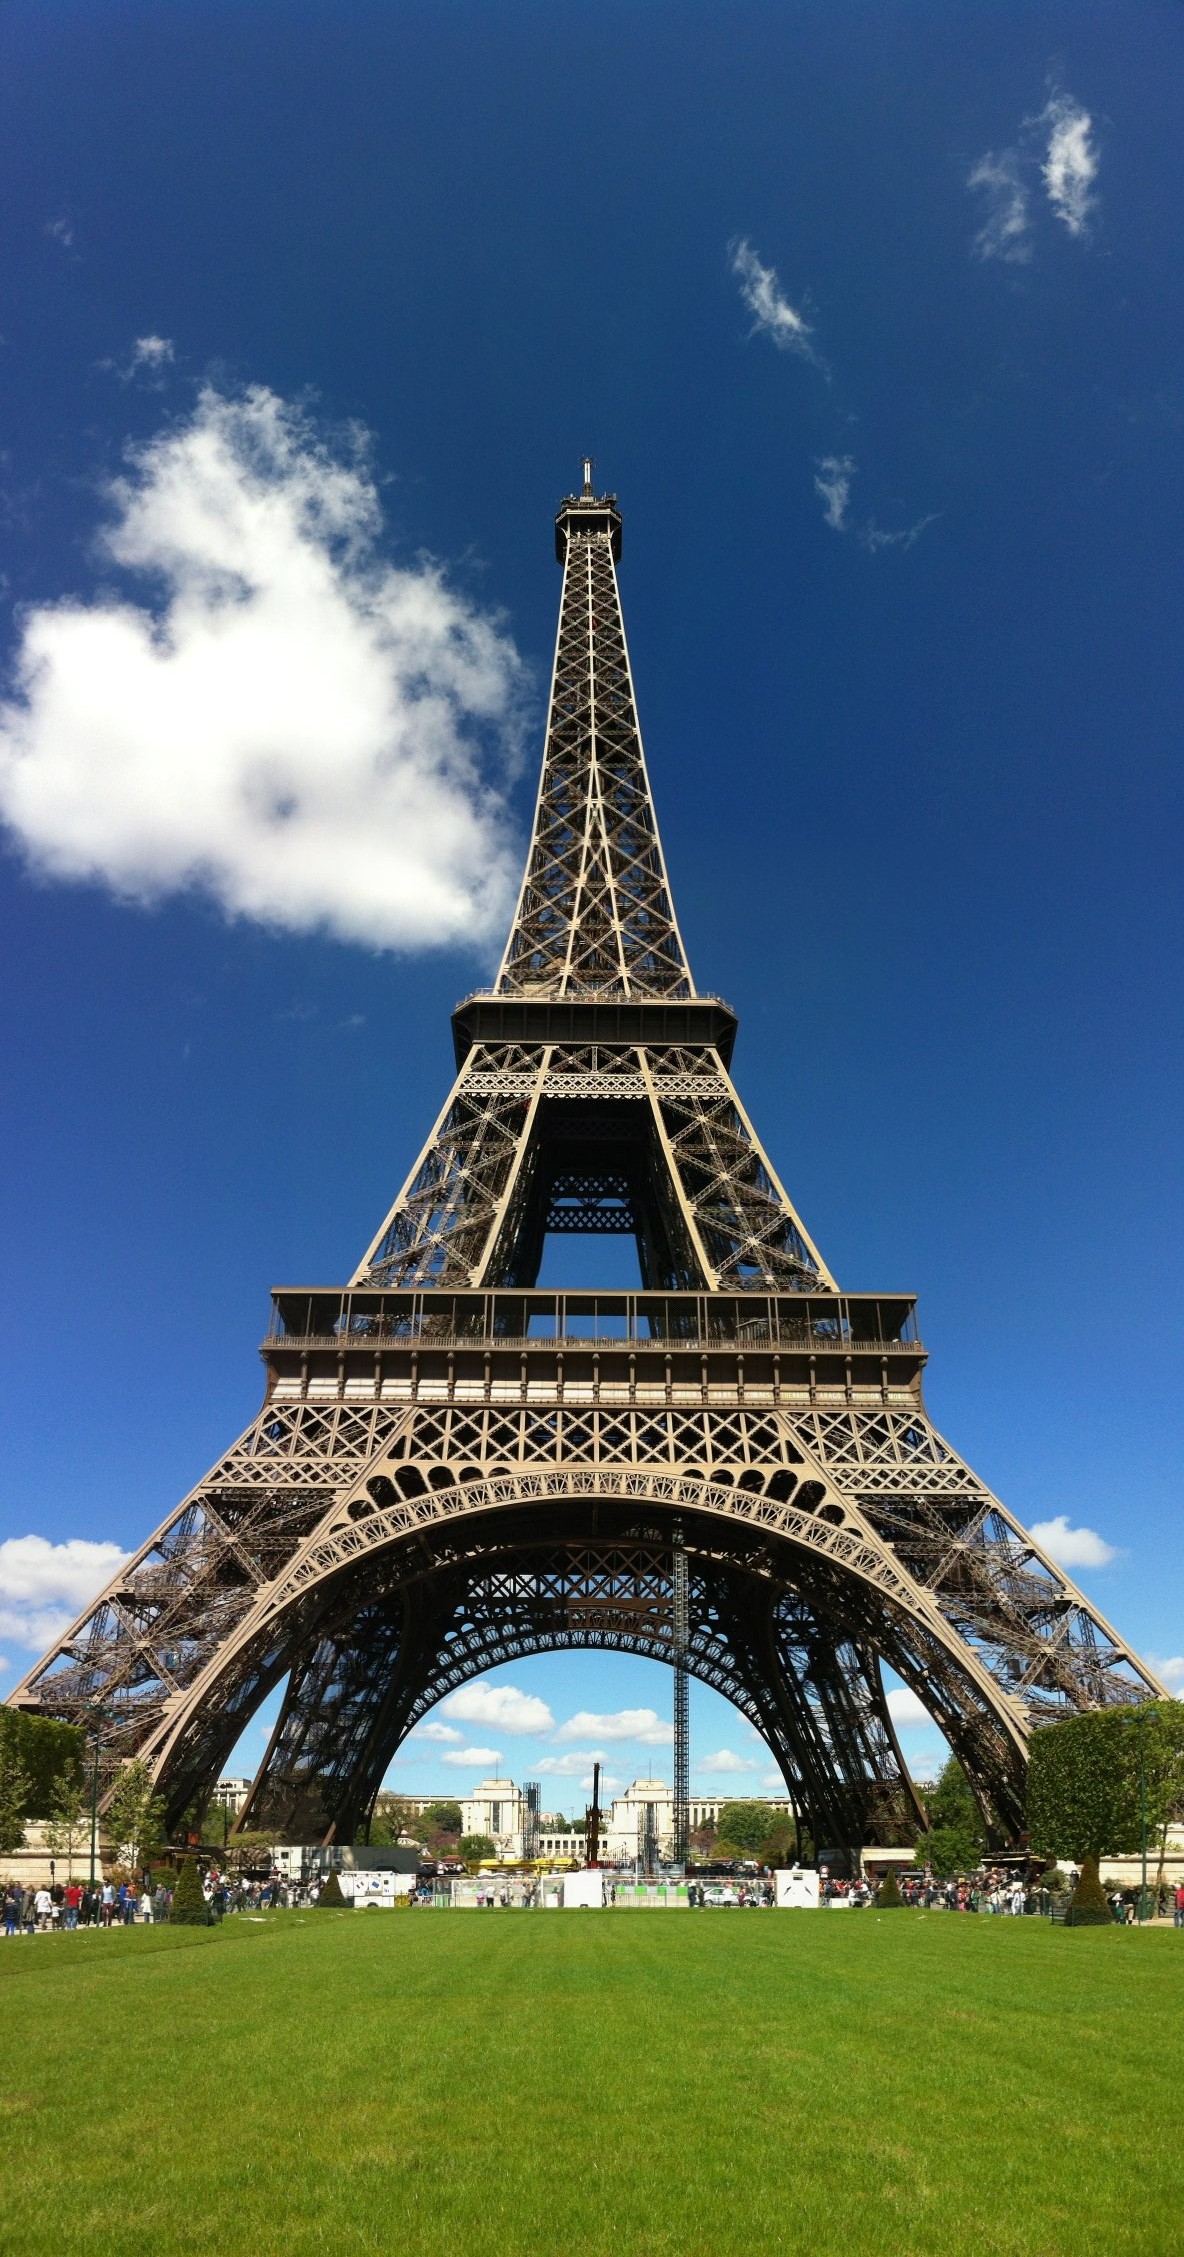 The Eiffel Tower - Eiffel Tower - 1184x2257 Wallpaper 